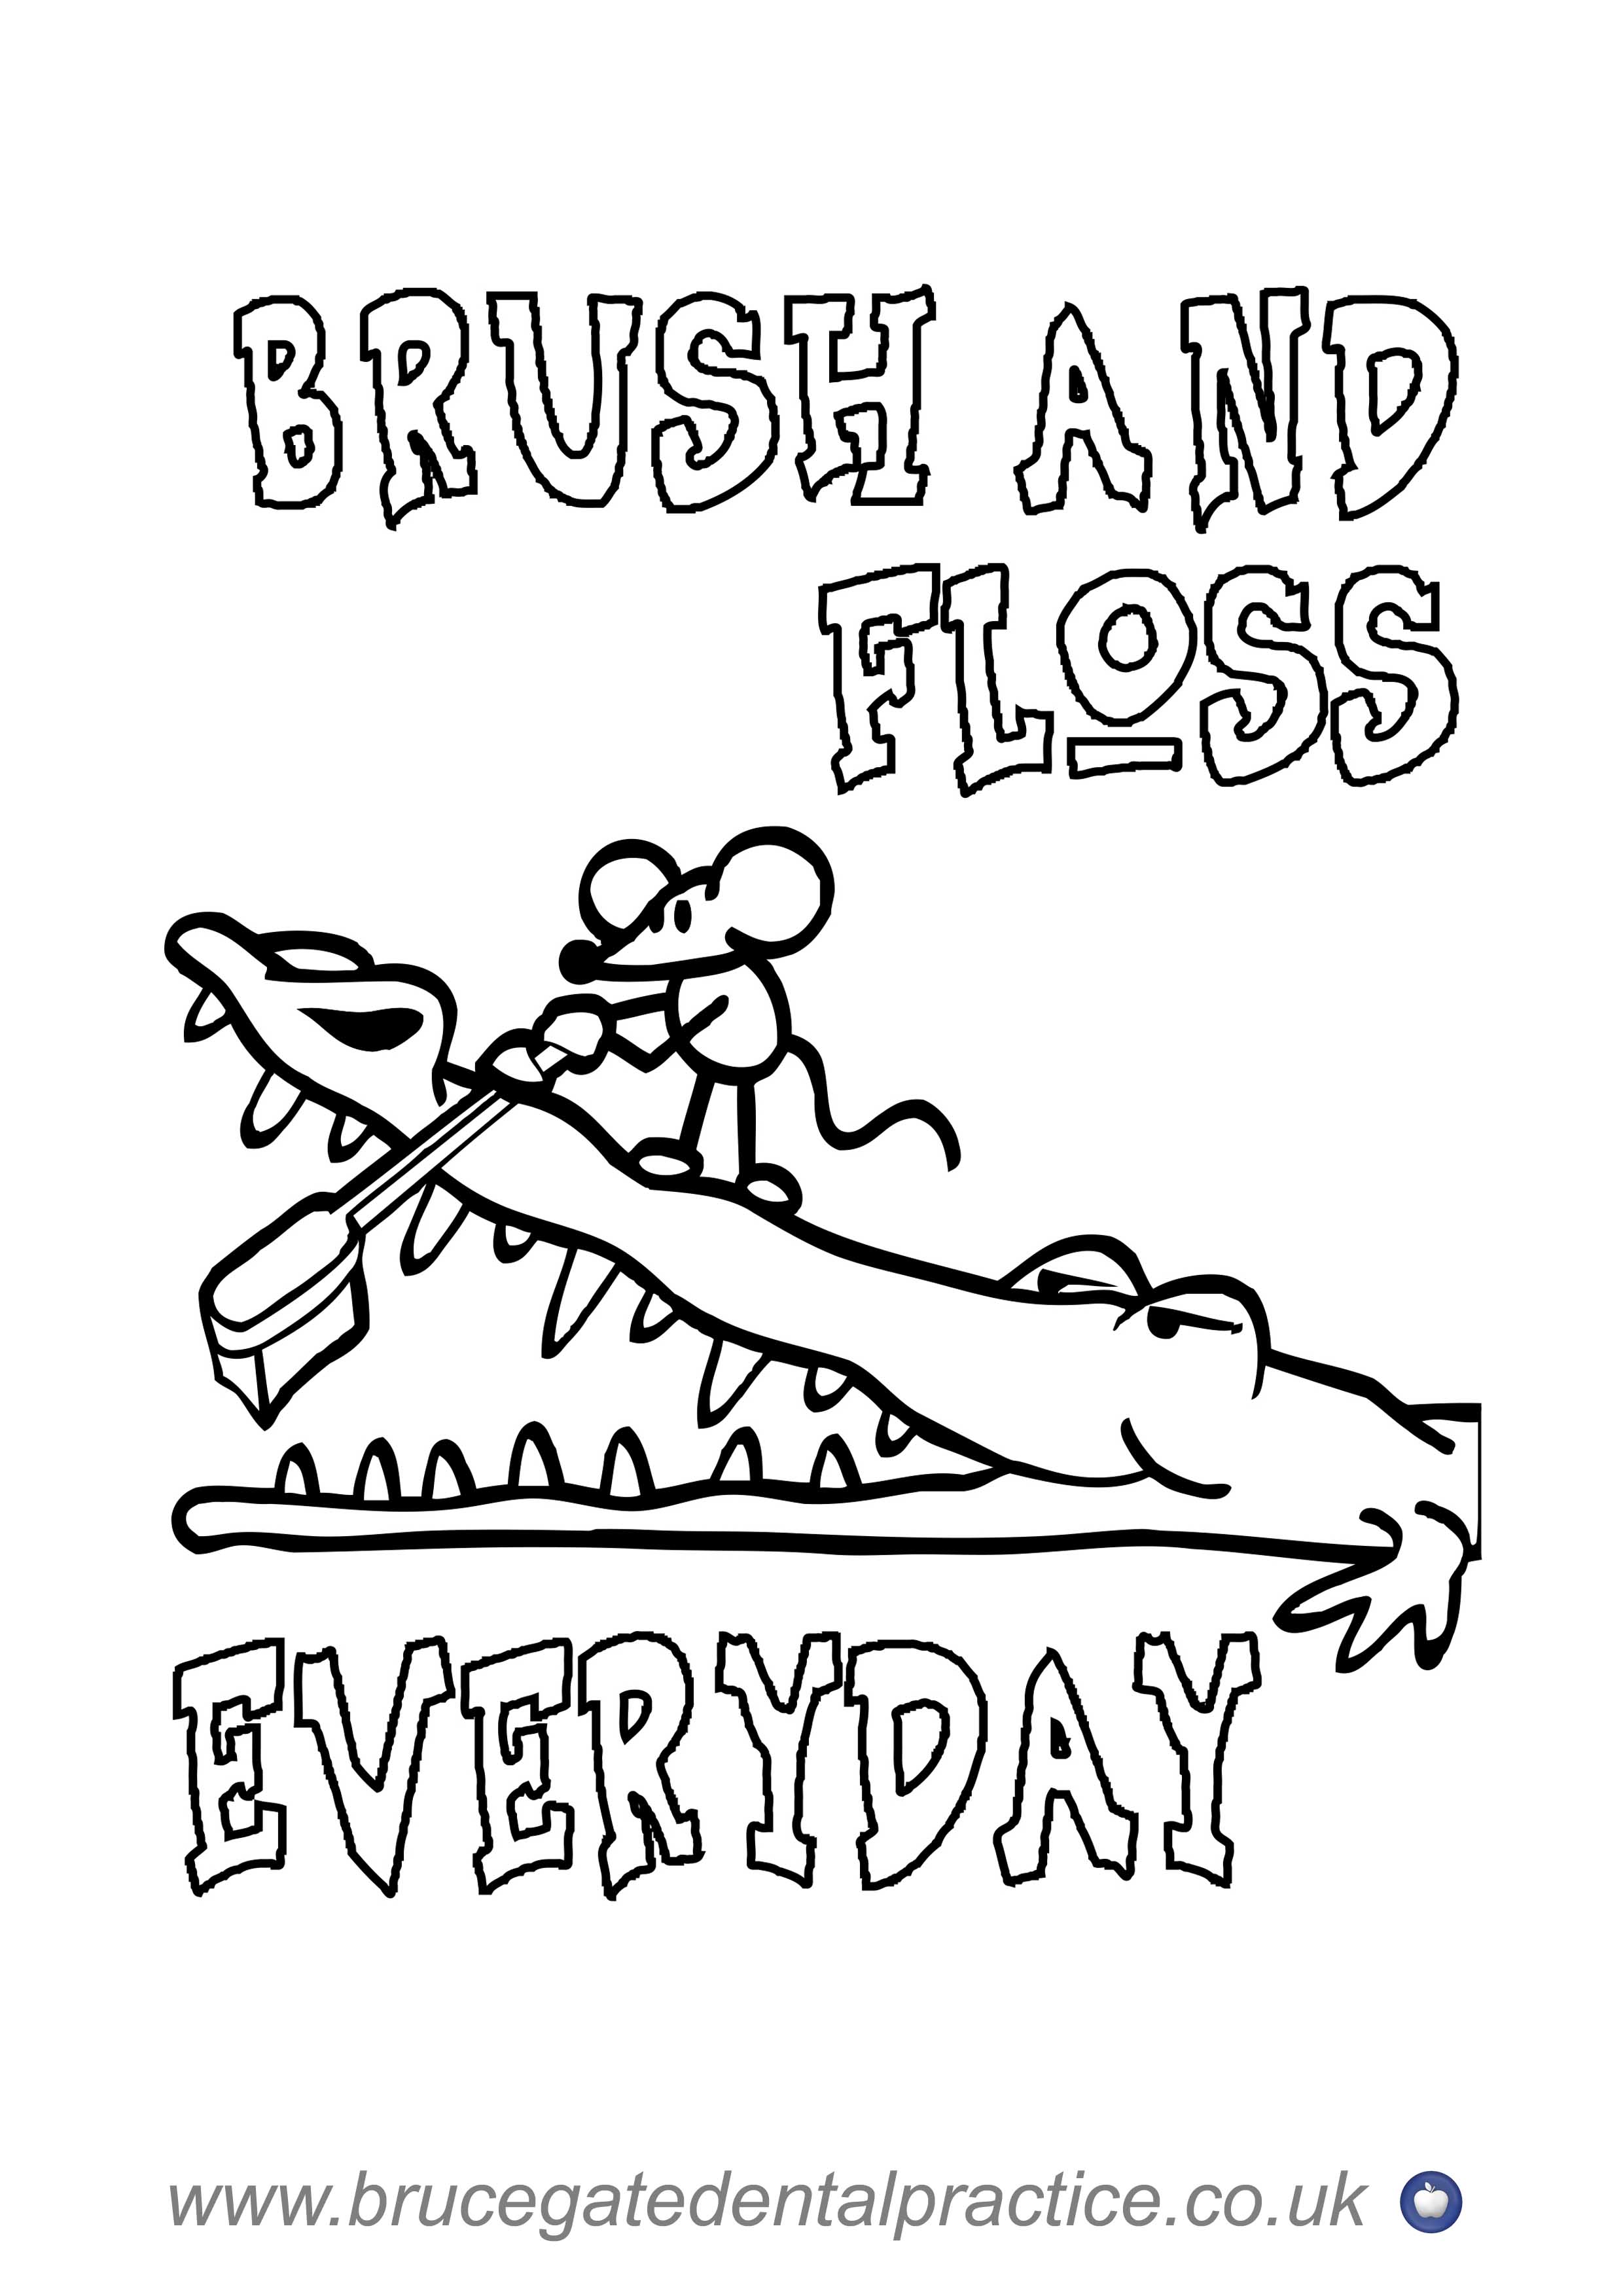 Brush and Floss